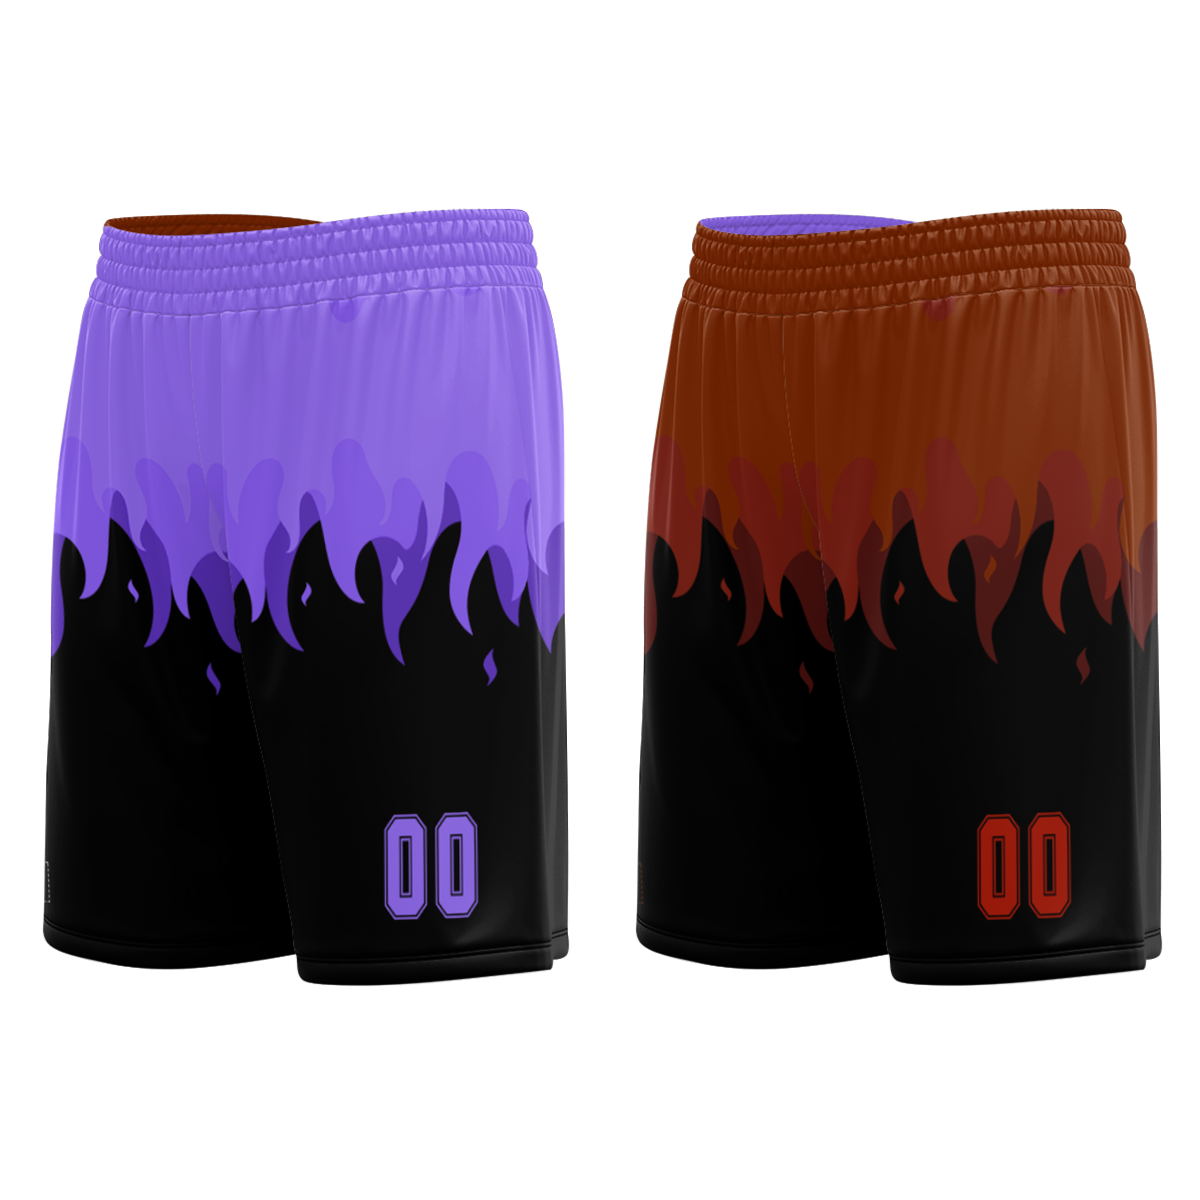 wholesale-custom-sublimation-printing-short-sleeve-sportswear-competitive-reversible-basketball-jersey-at-cj-pod-8